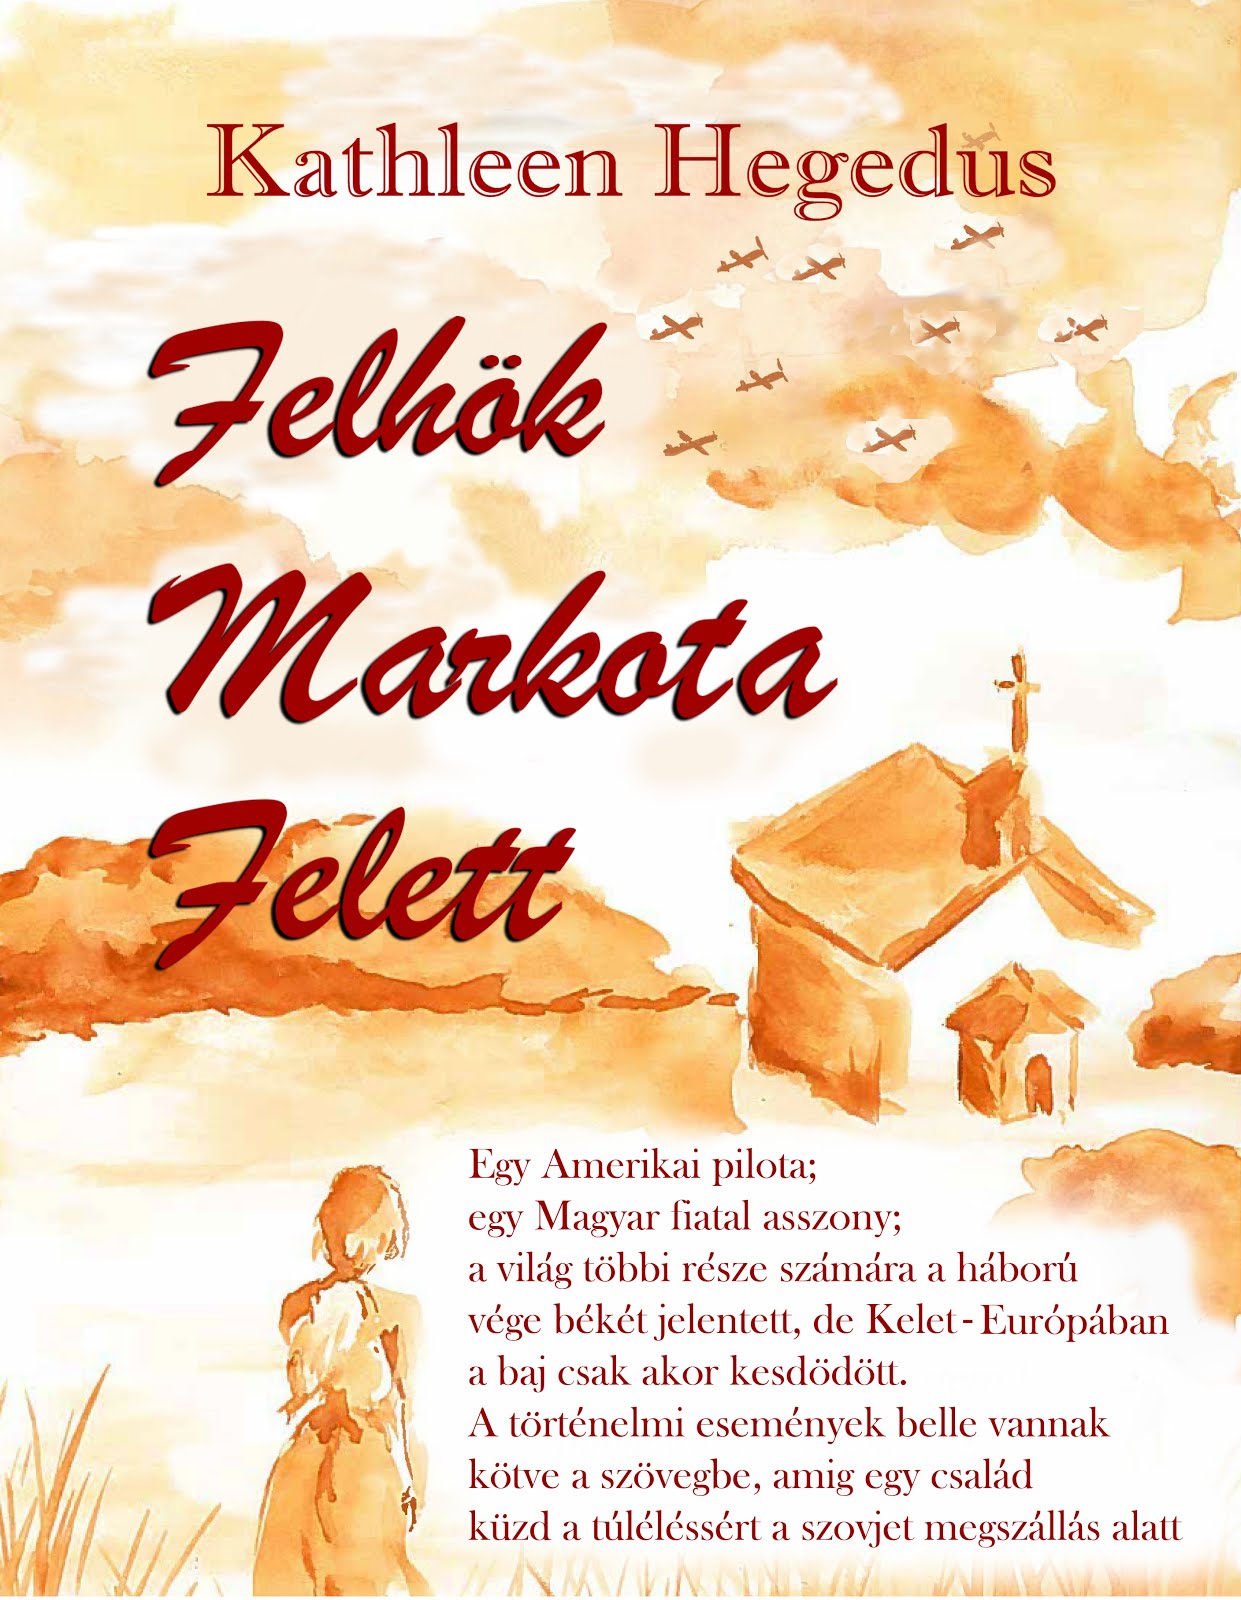 Hungarian Language Translation of Clouds Over Markota